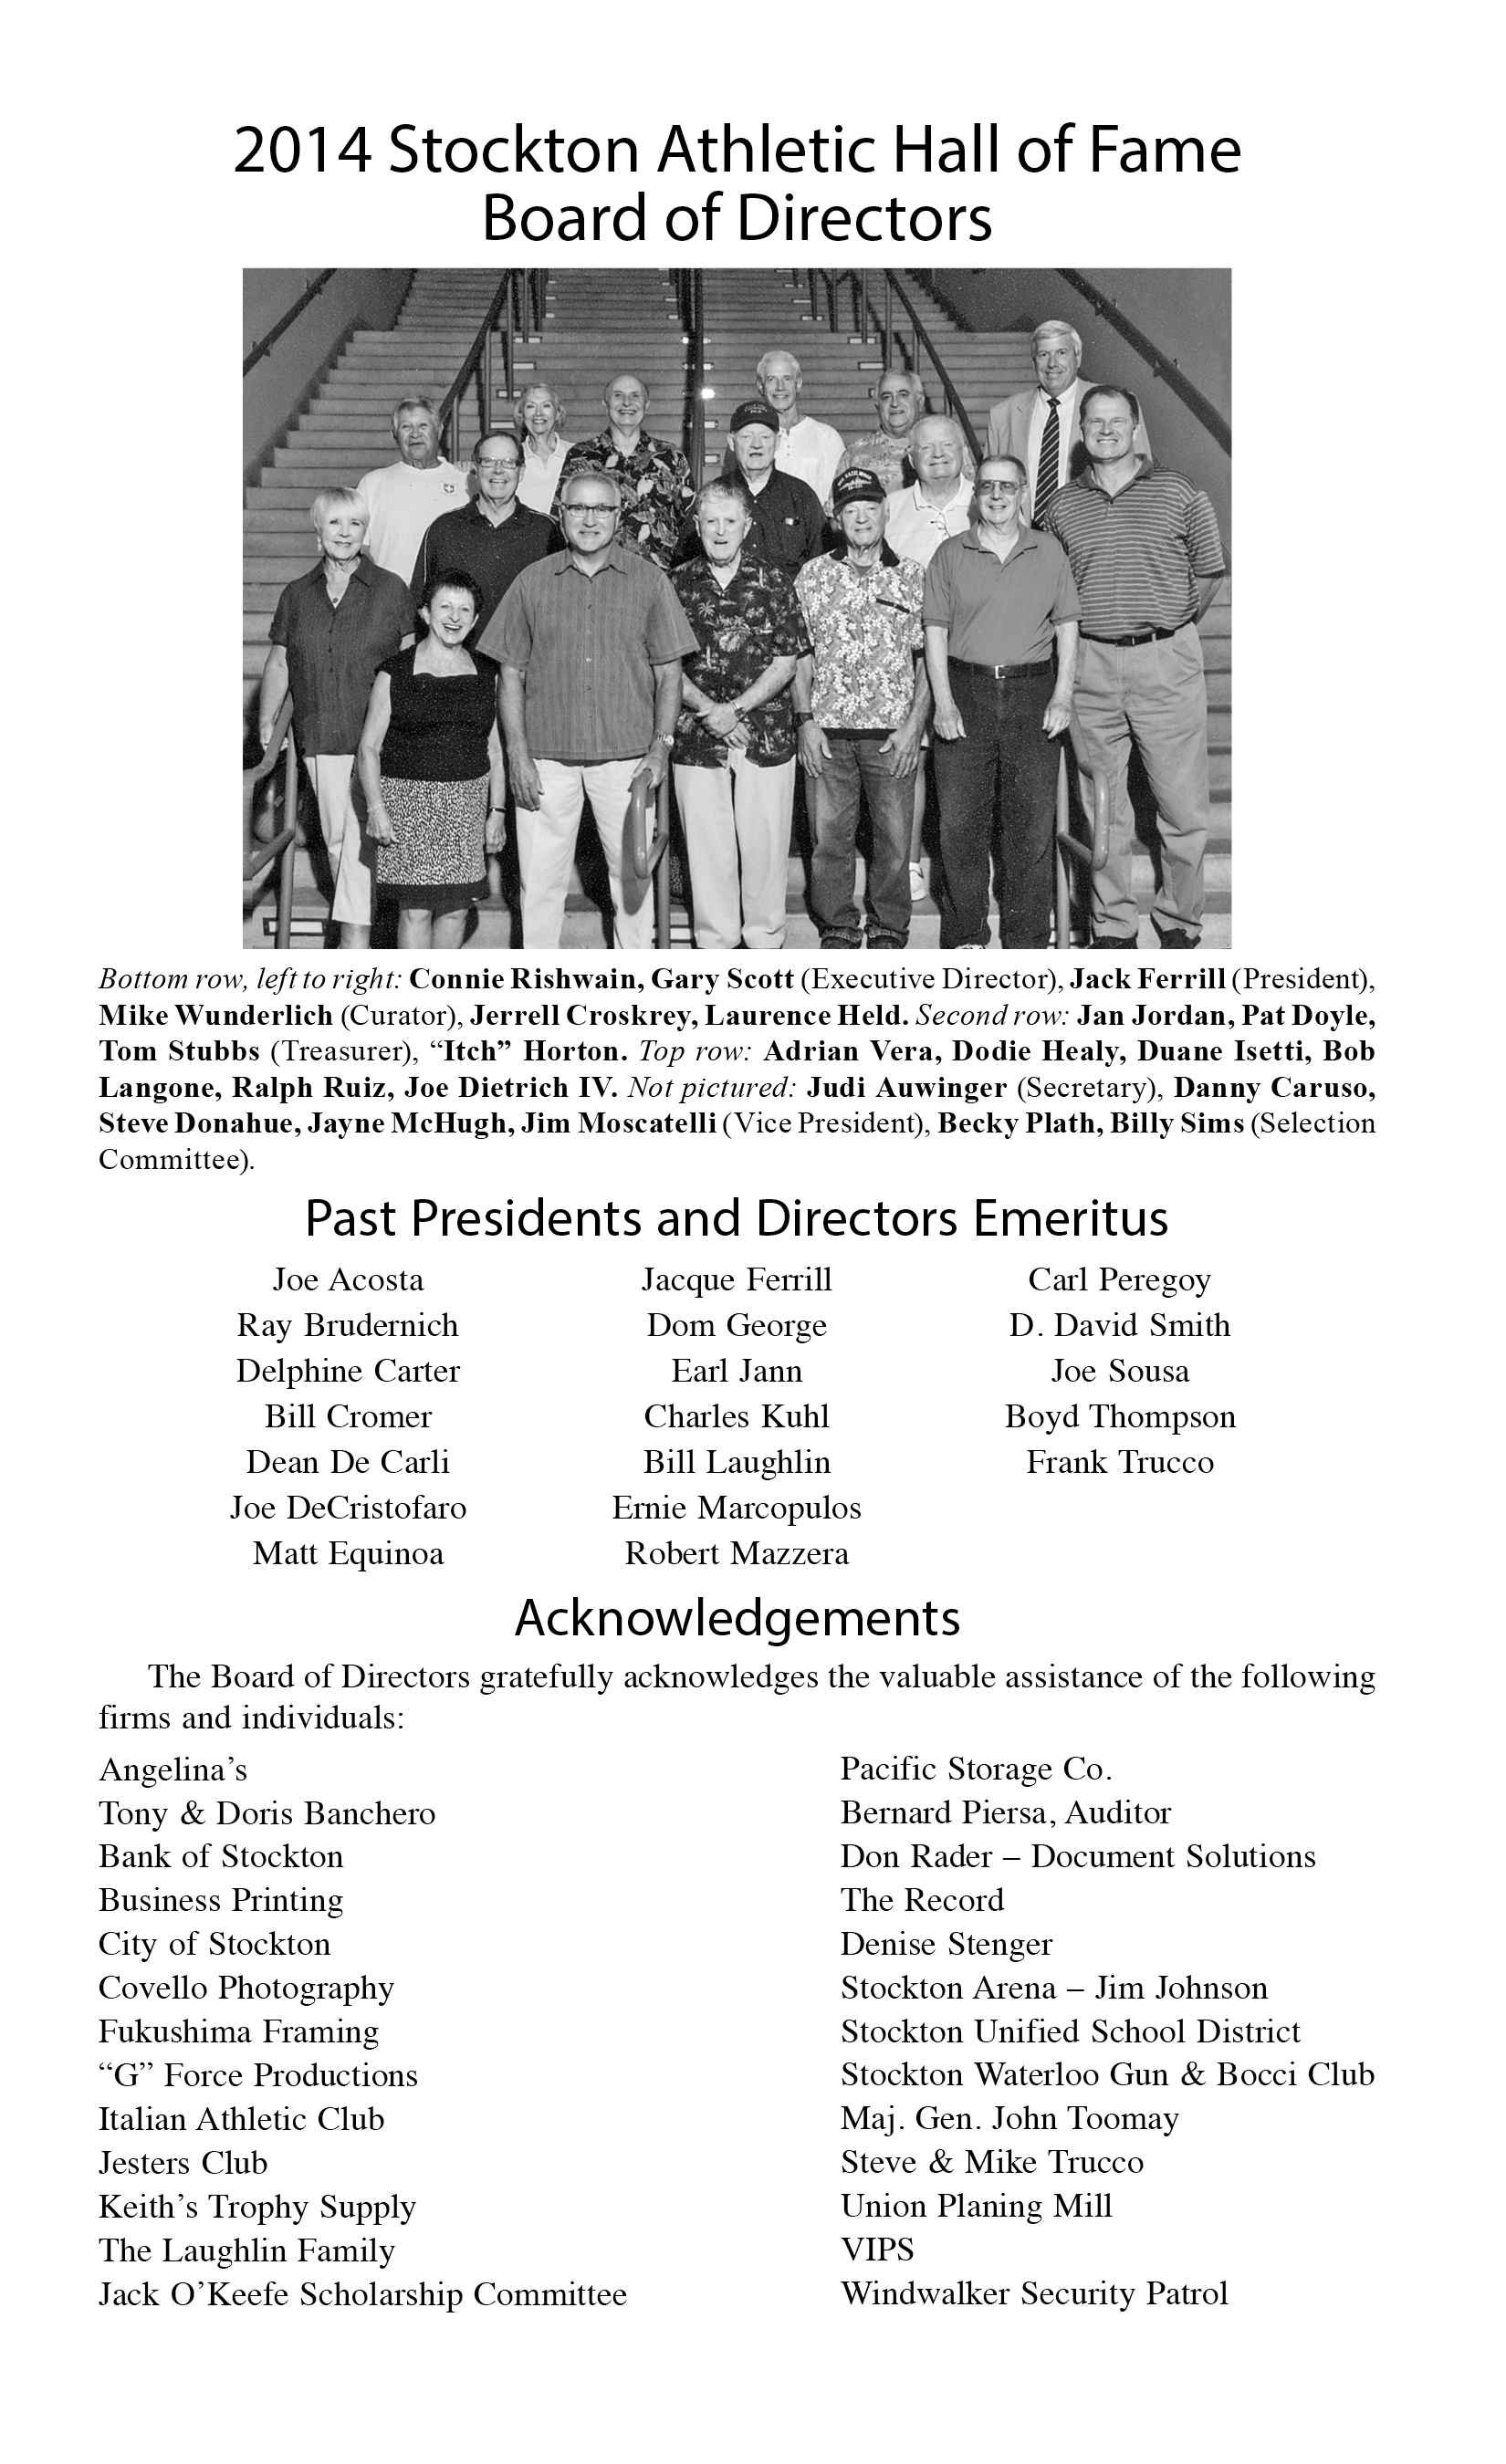 2014 board of directors